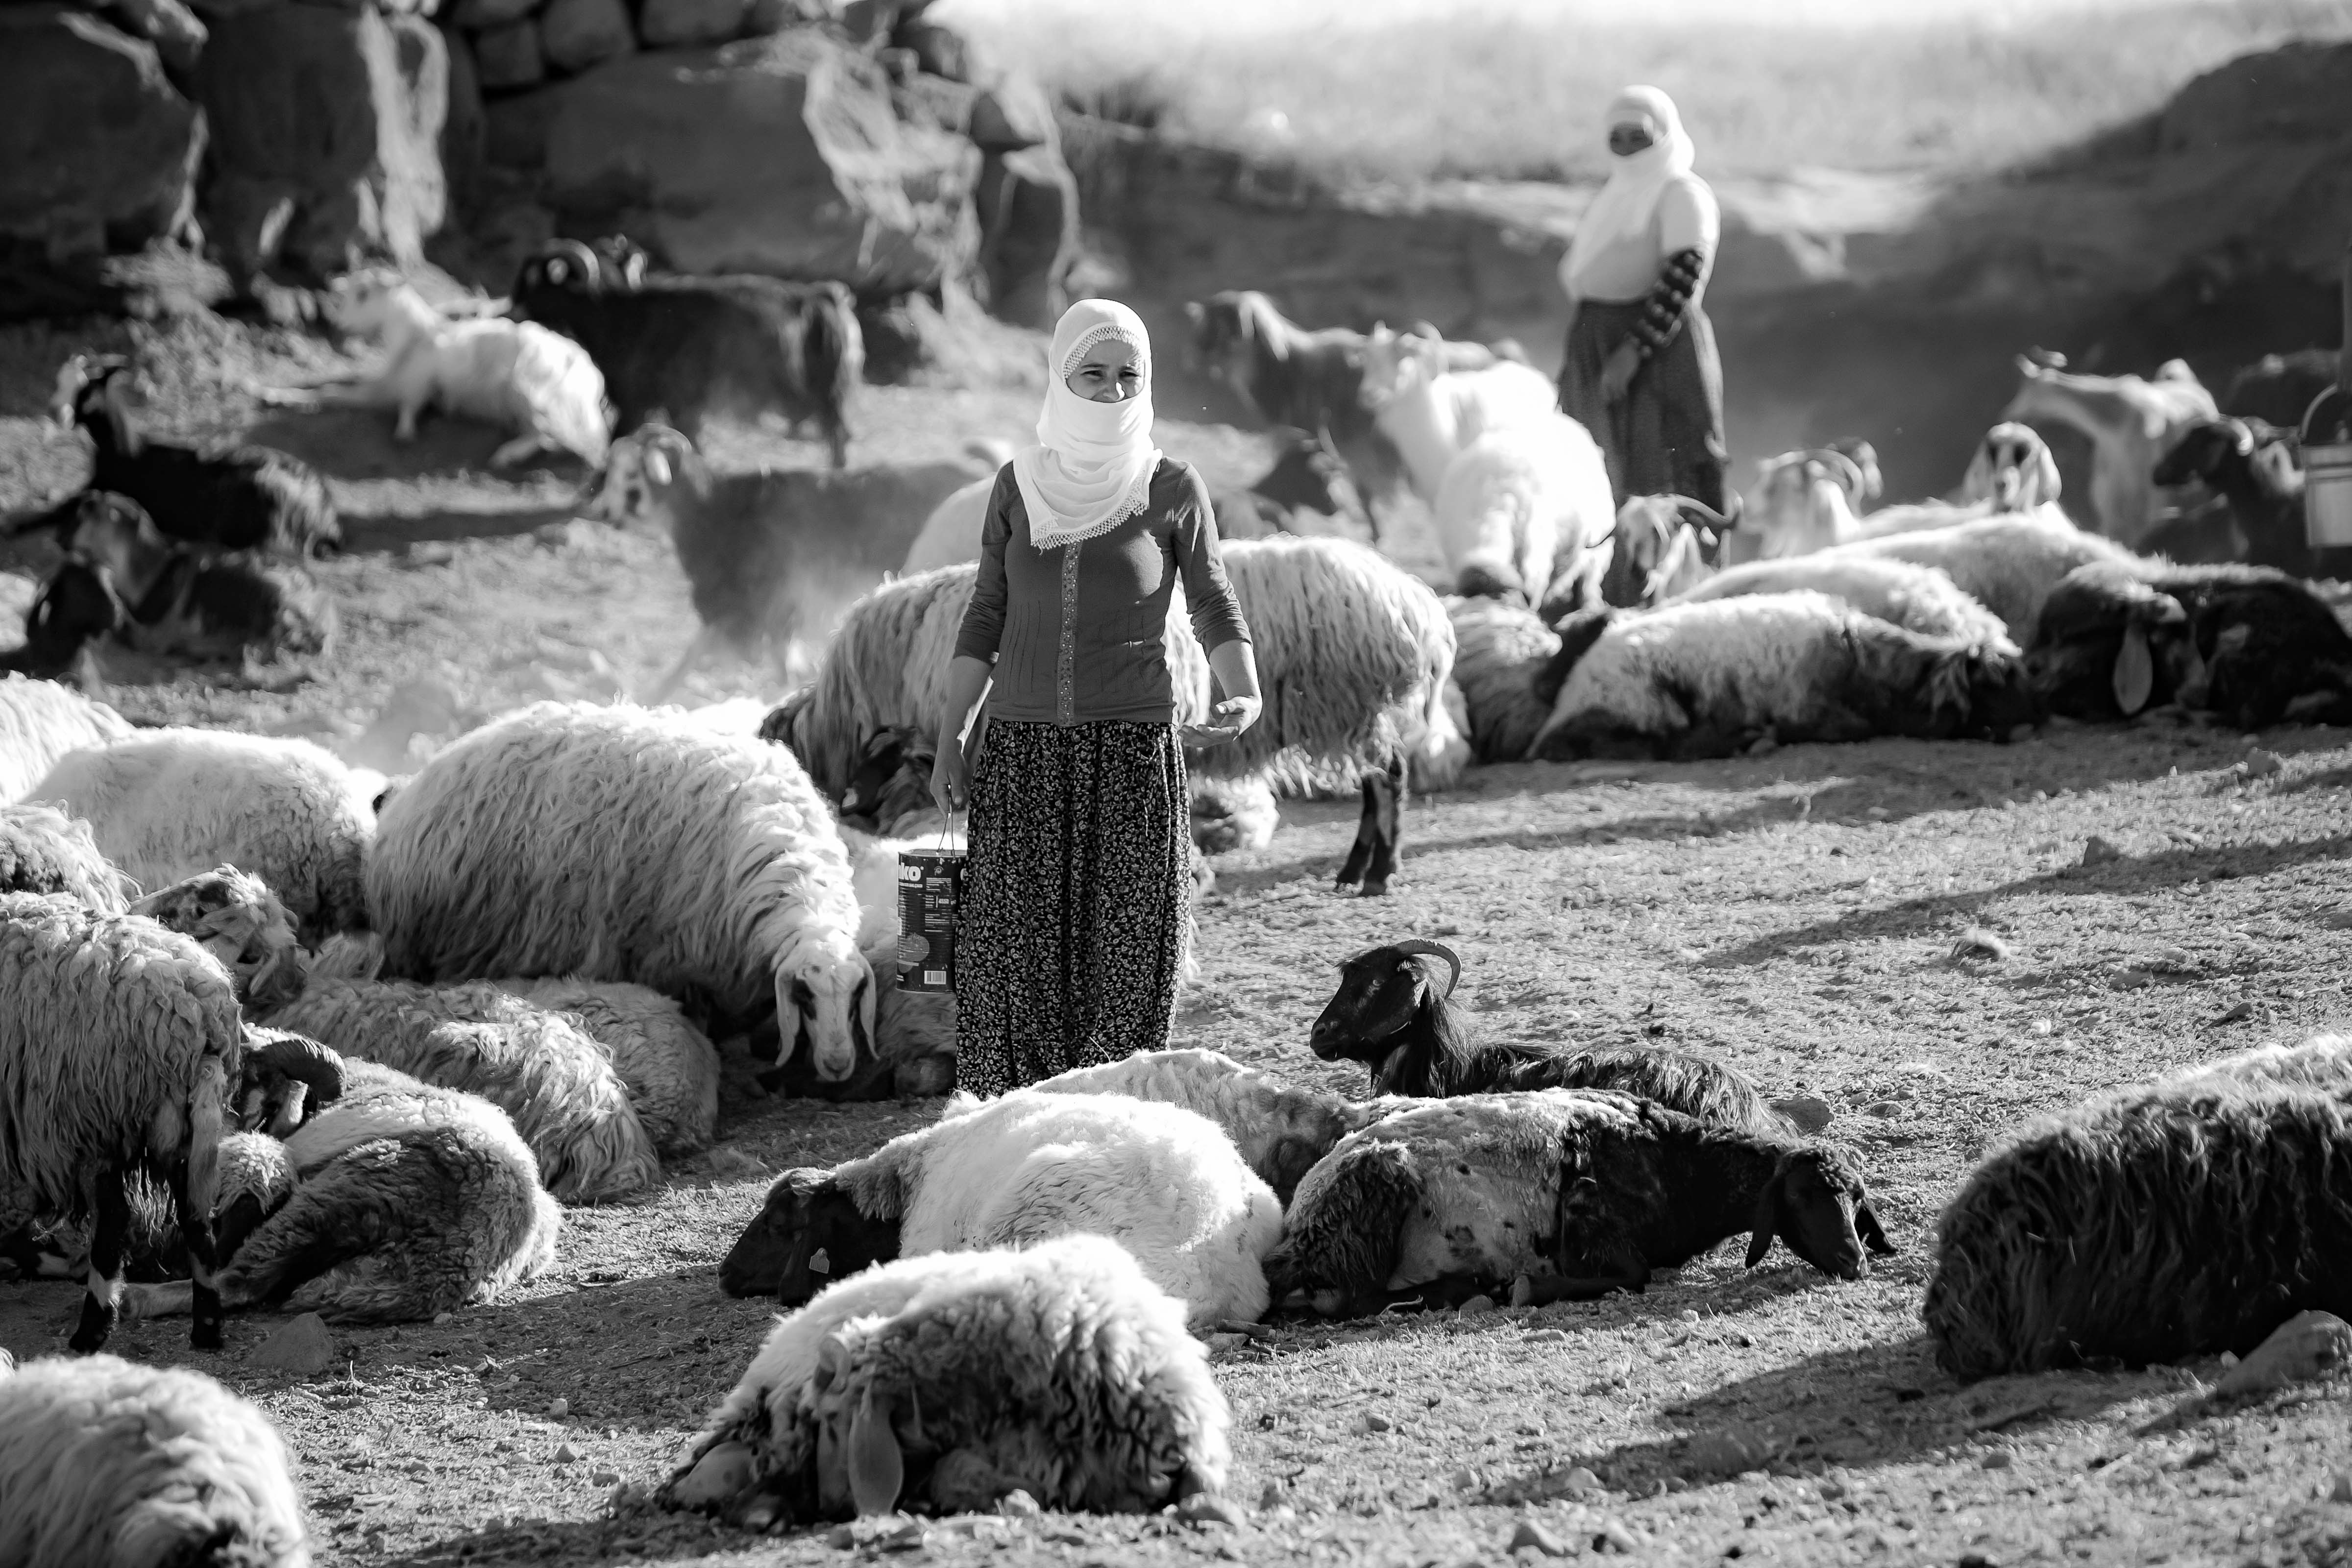 Turkey, Bitlis Prov, Sheep Camp, 2010, IMG 8593BW